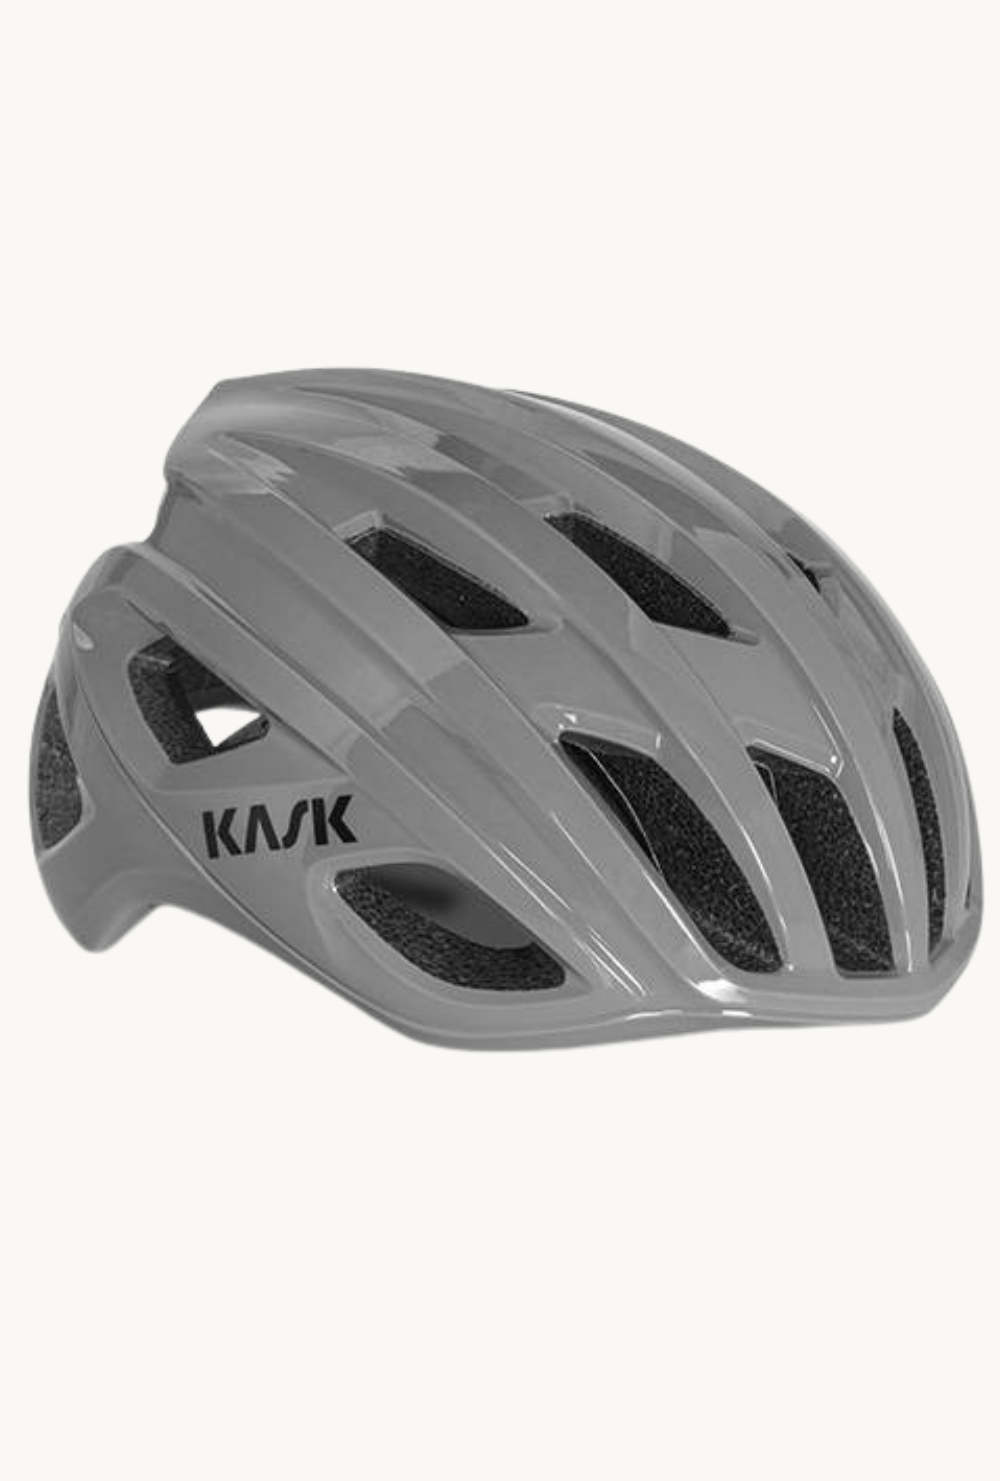 Helmet - Kask Mojito Greylarge / Grey